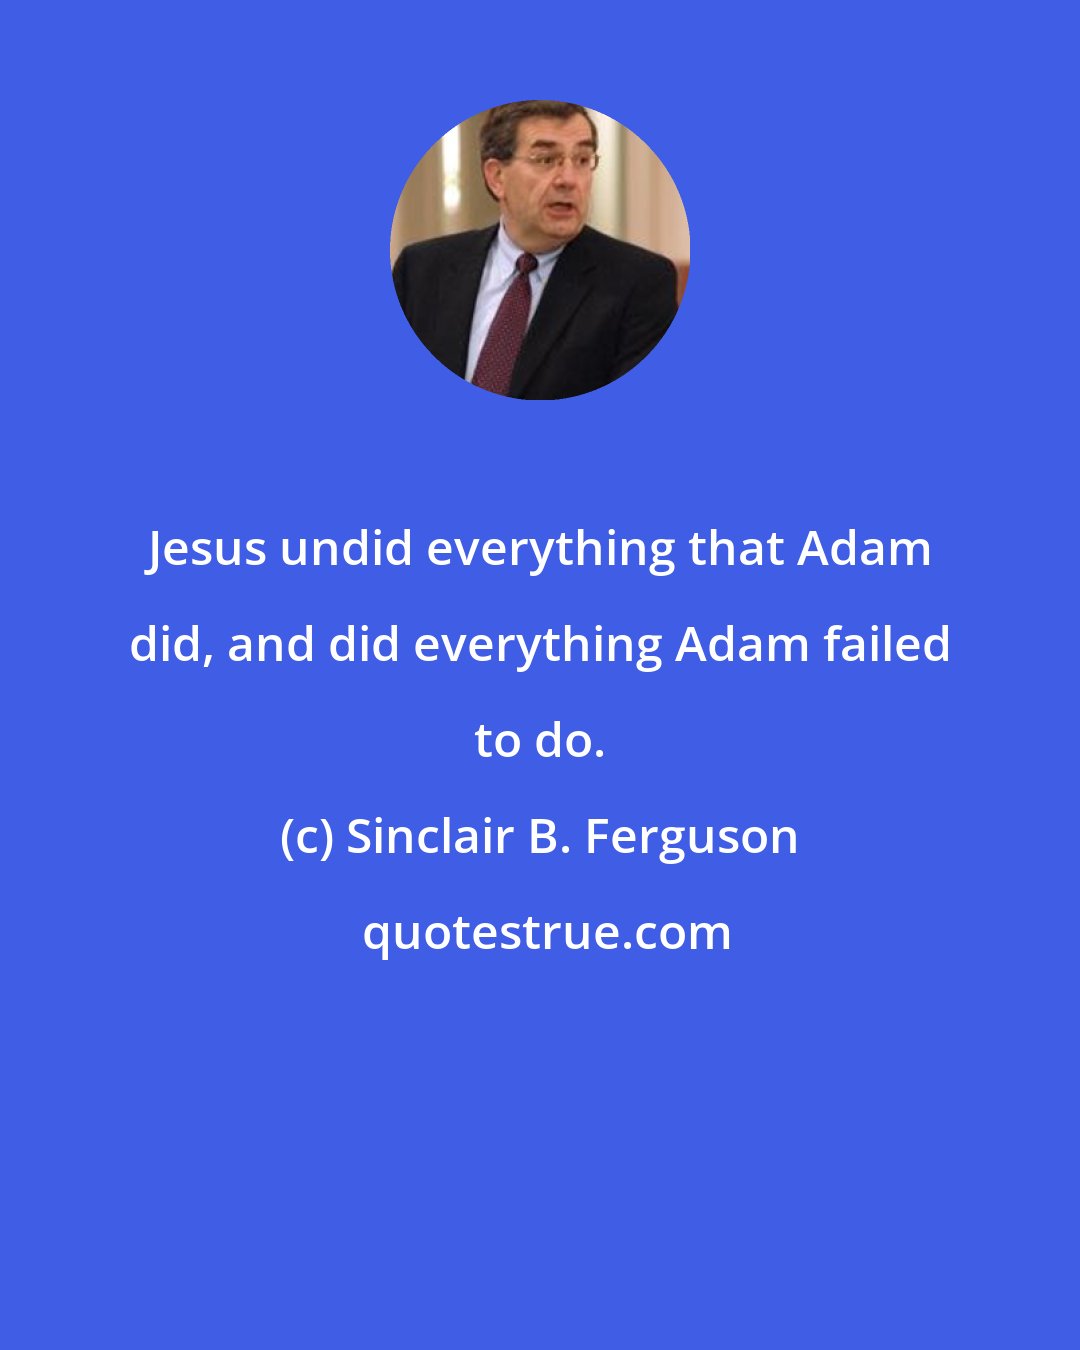 Sinclair B. Ferguson: Jesus undid everything that Adam did, and did everything Adam failed to do.